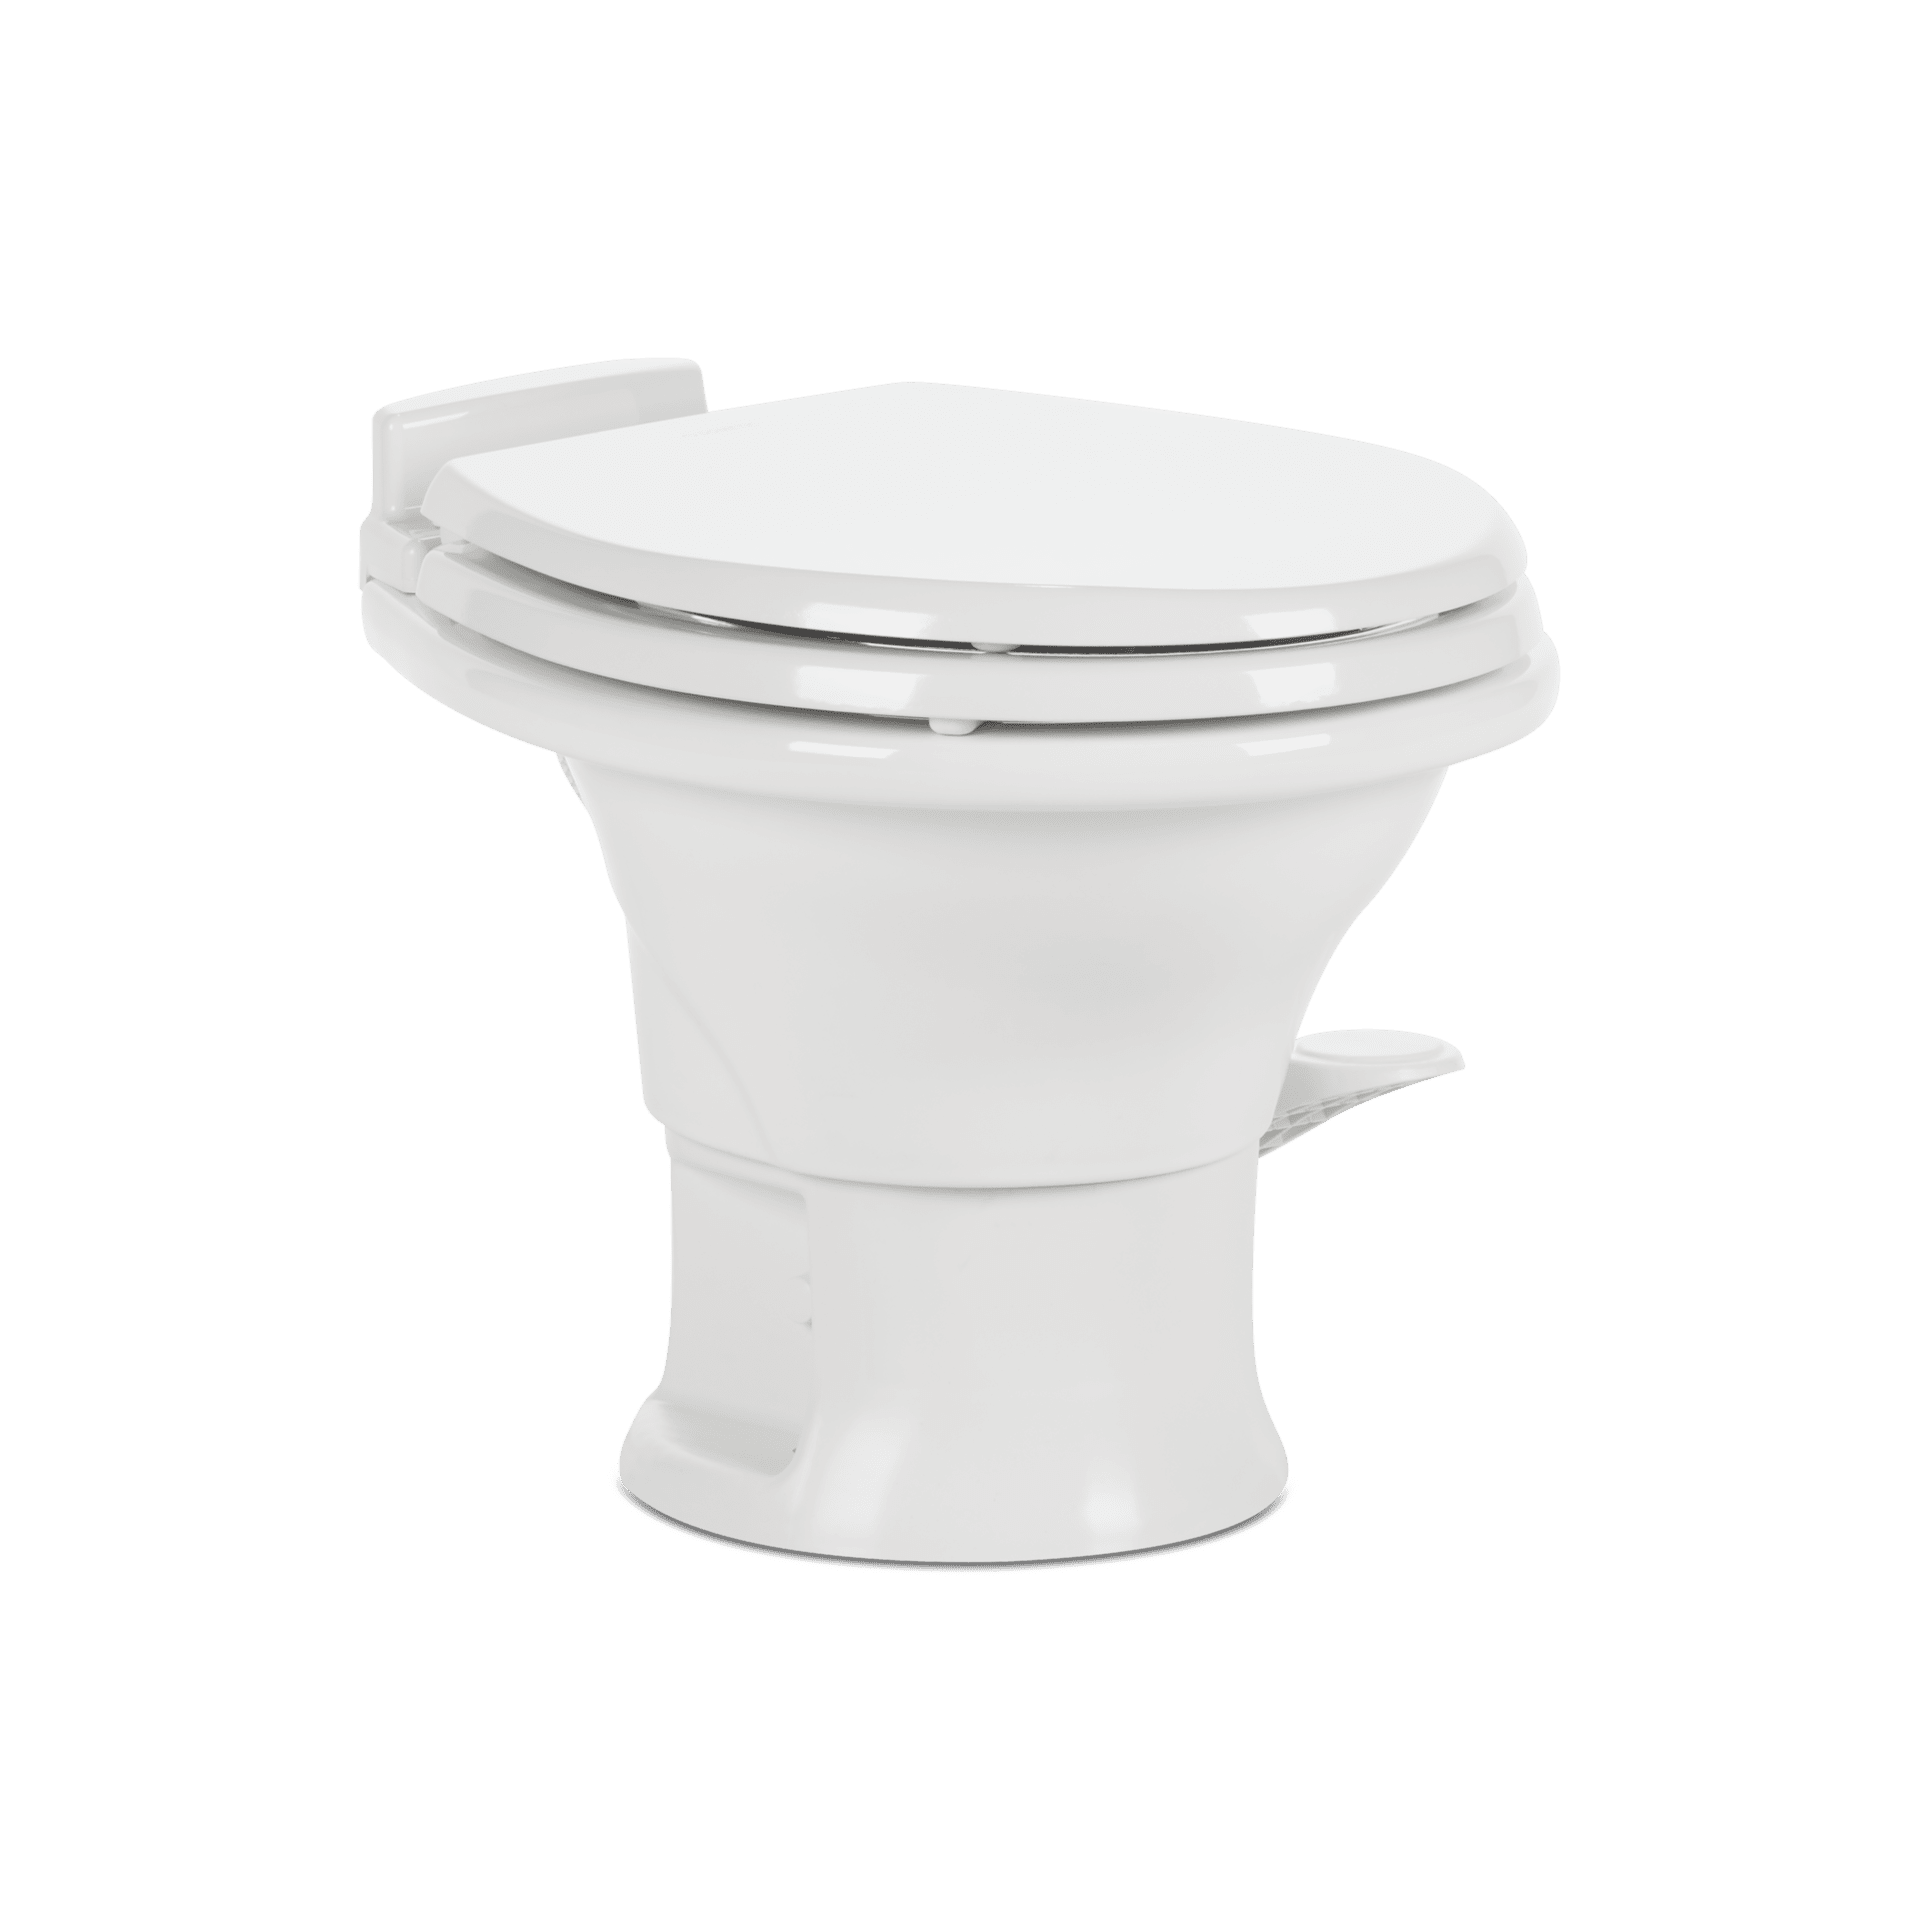 Dometic 311 - Gravity toilet, ceramic bowl, low-profile height